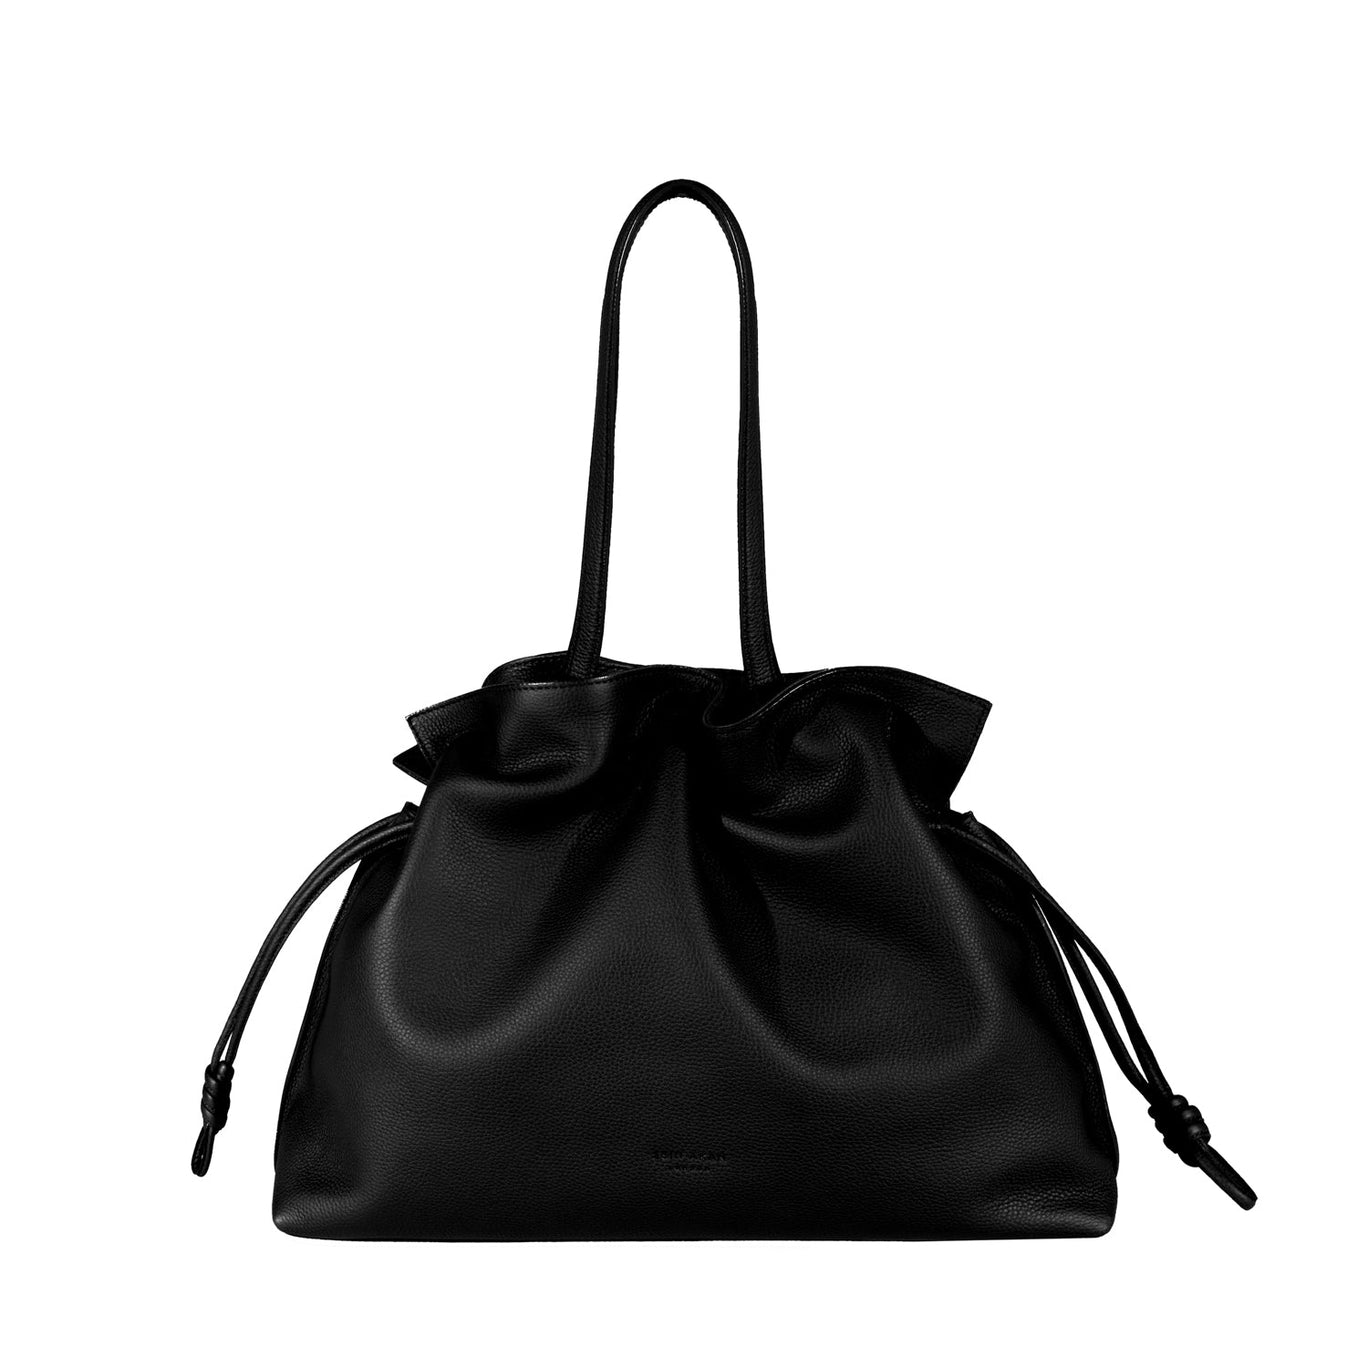 Emma Black Leather Tote Bag